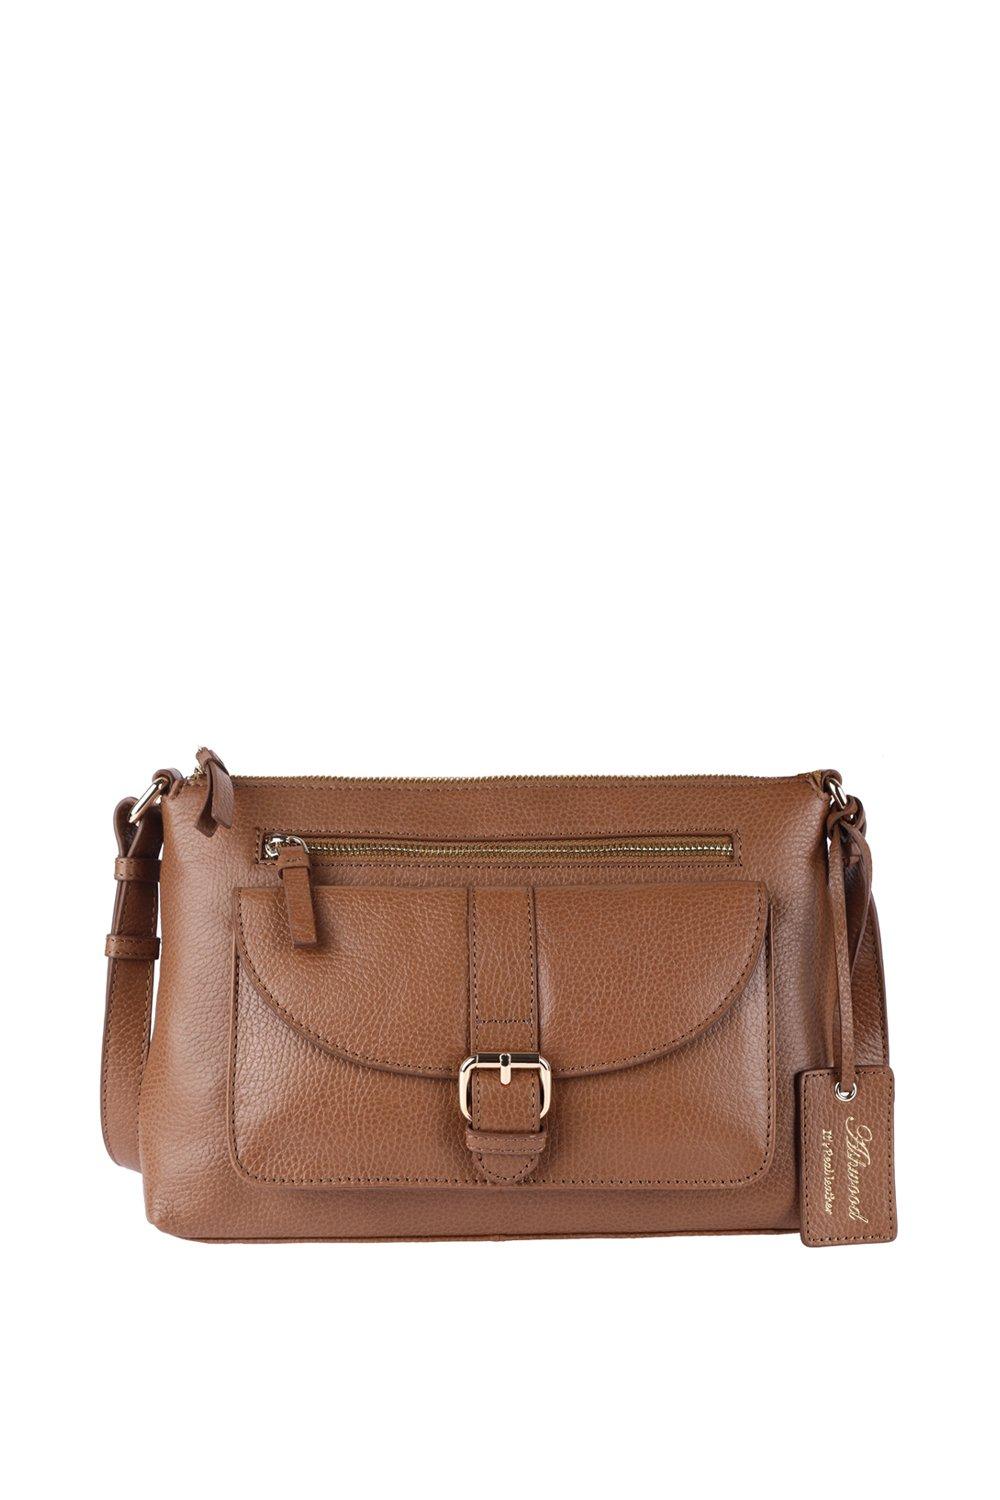 Кожаная сумка через плечо 'Pretty' Ashwood Leather, коричневый